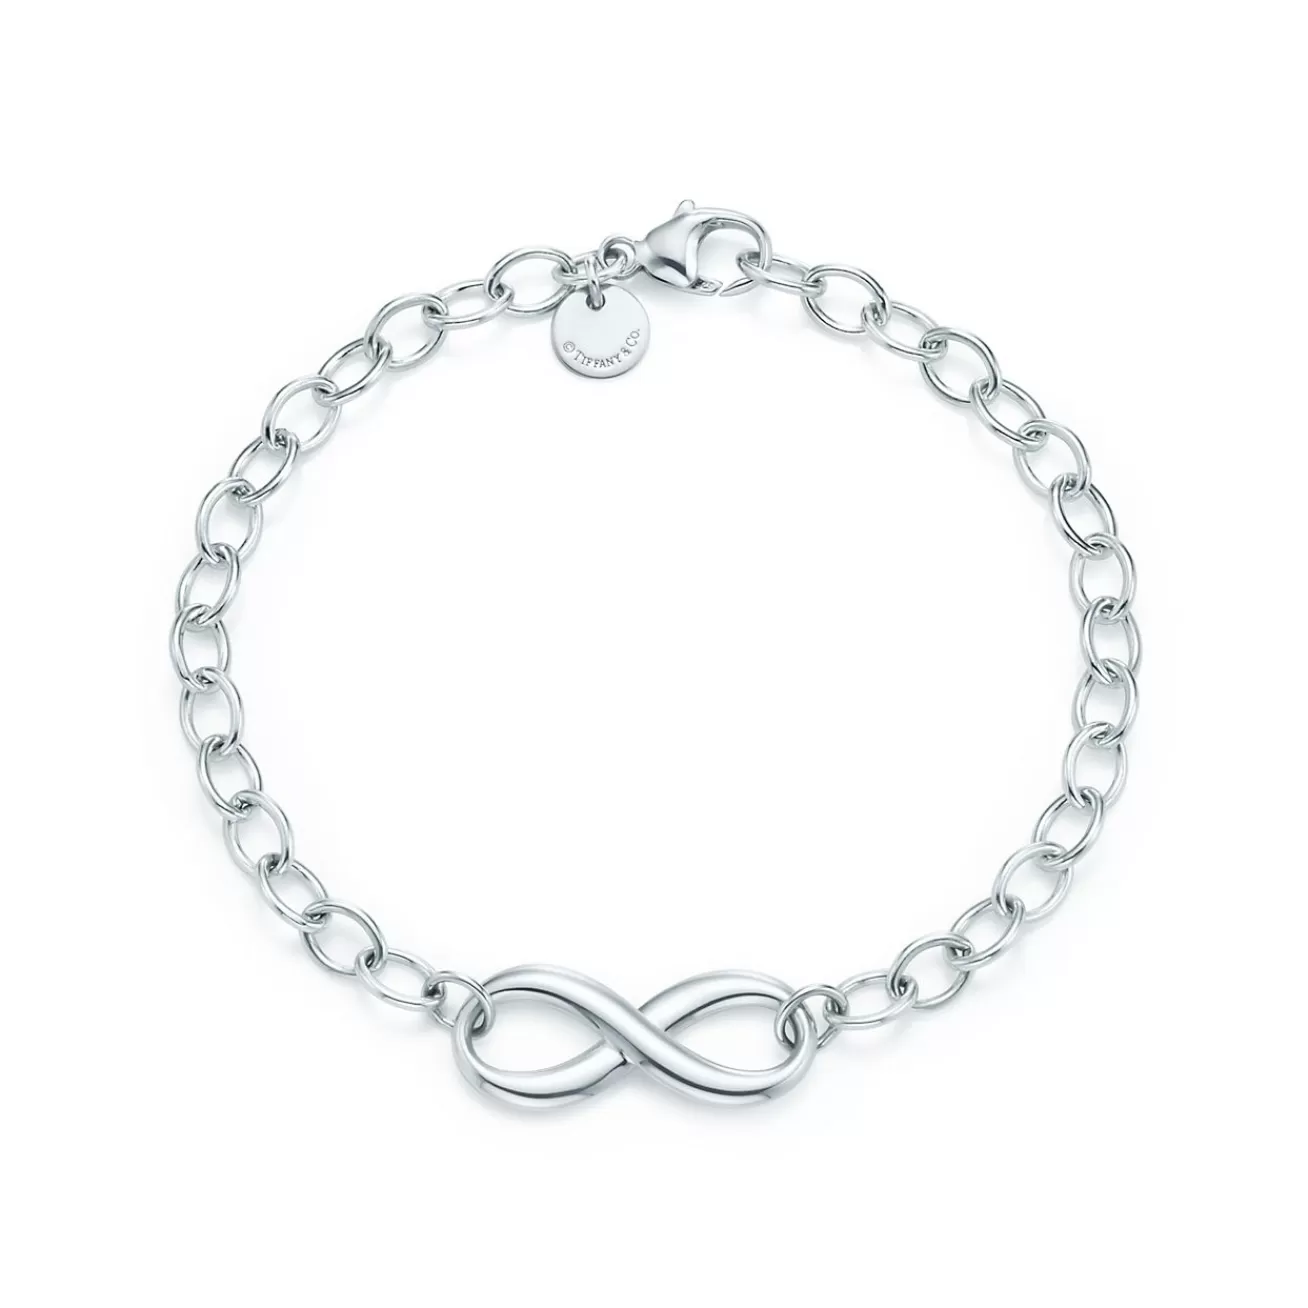 Tiffany & Co. Infinity Bracelet in Sterling Silver | ^ Bracelets | Gifts for Her